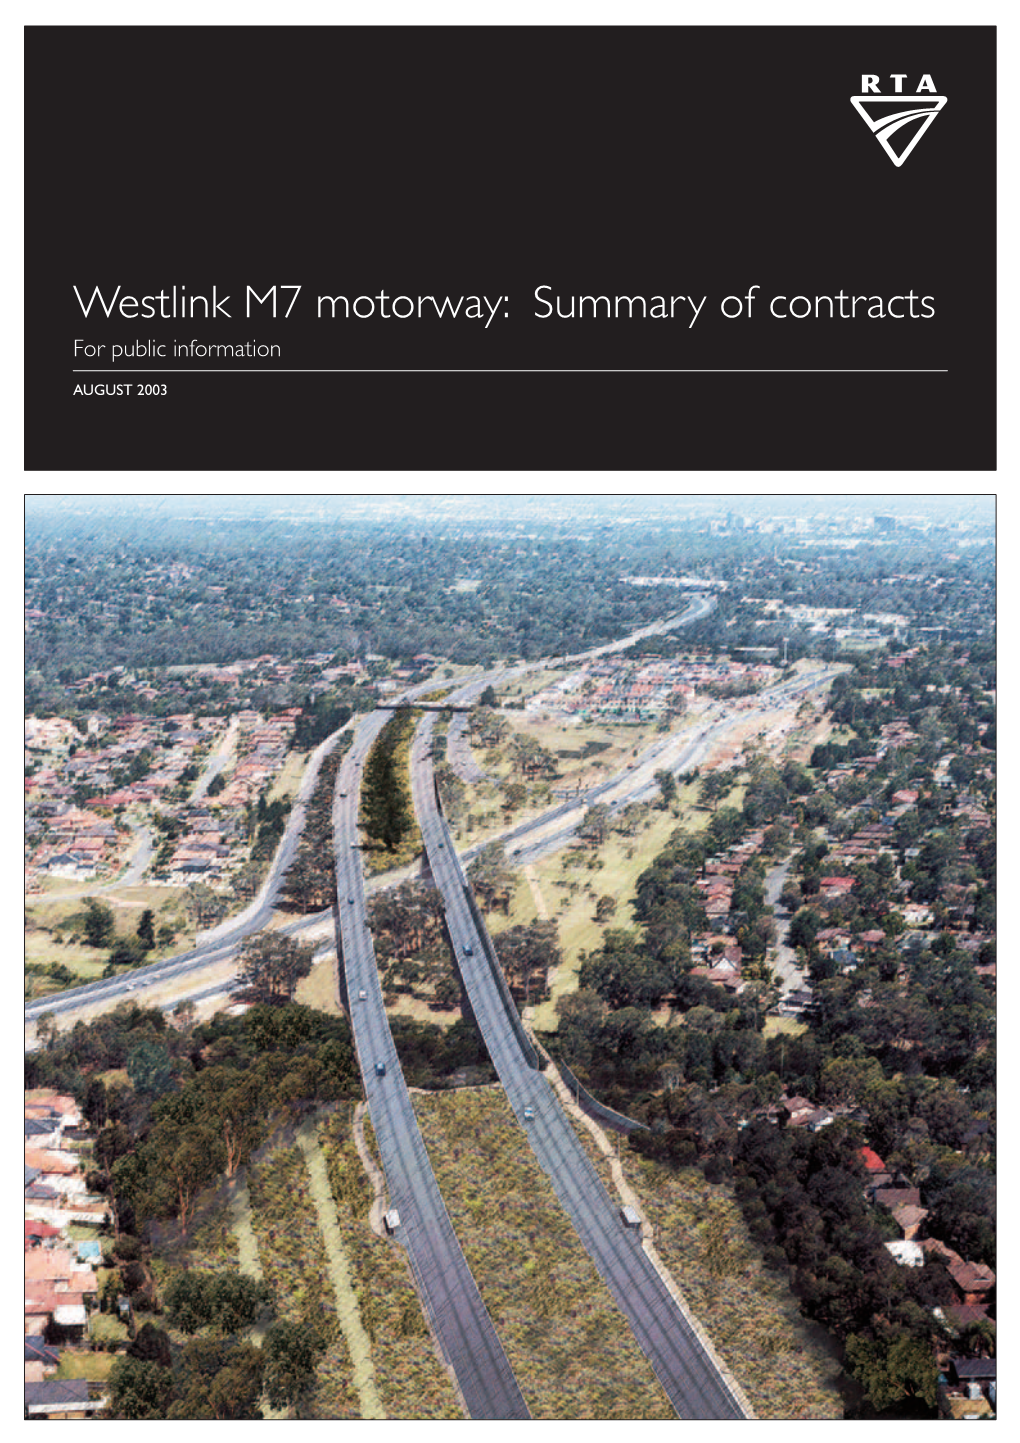 Westlink M7 Contract Summary